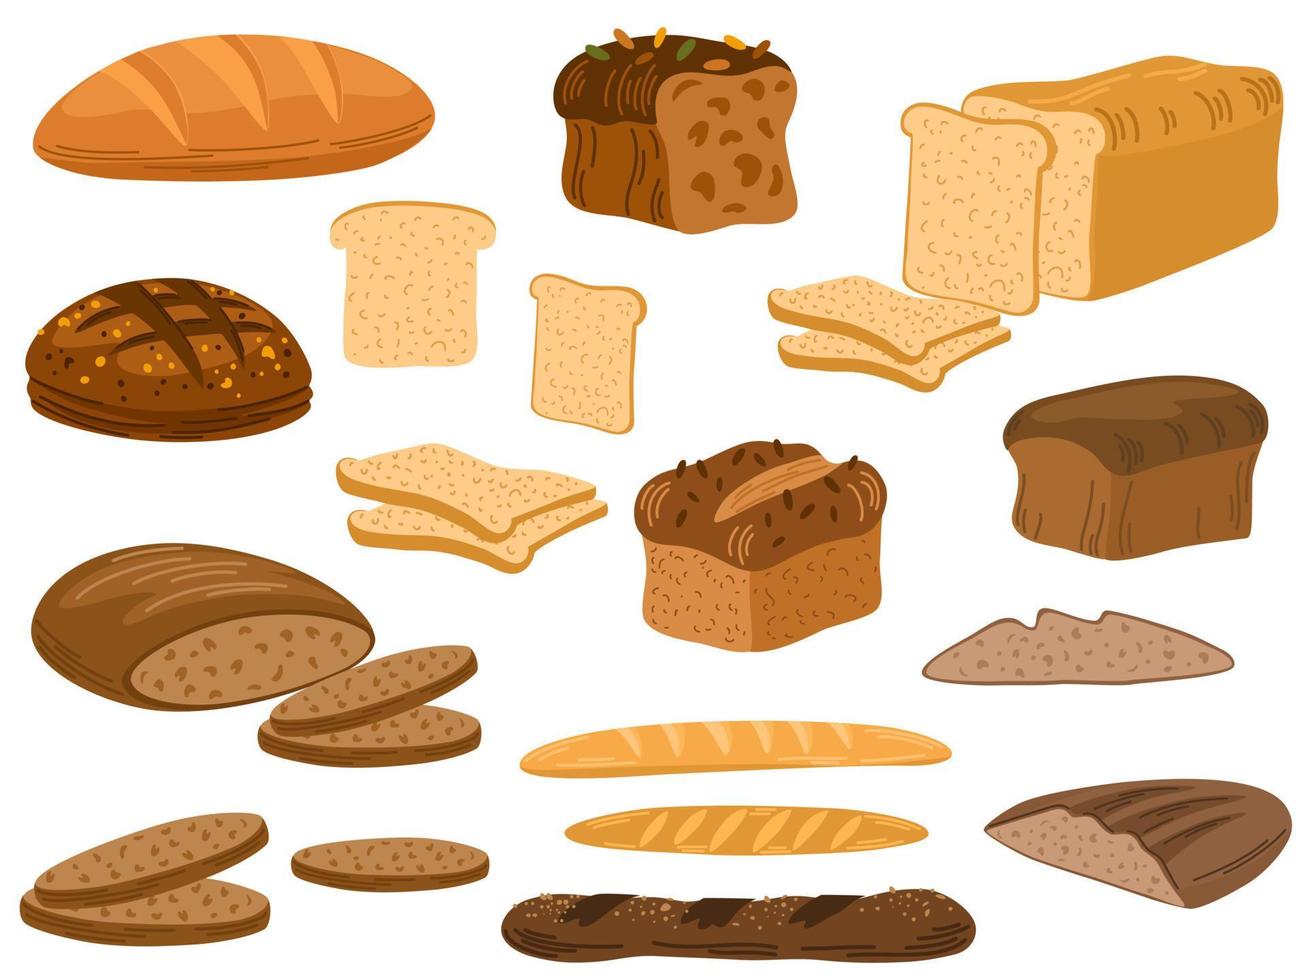 brood vector verzameling. keuken tekenfilm bakkerij voedsel, tarwe brood, krakeling, koekje, pita brood, ciabatta, croissant, bagel, geroosterd brood brood, Frans baguette voor bakkerij menu ontwerp. tekenfilm illustratie.